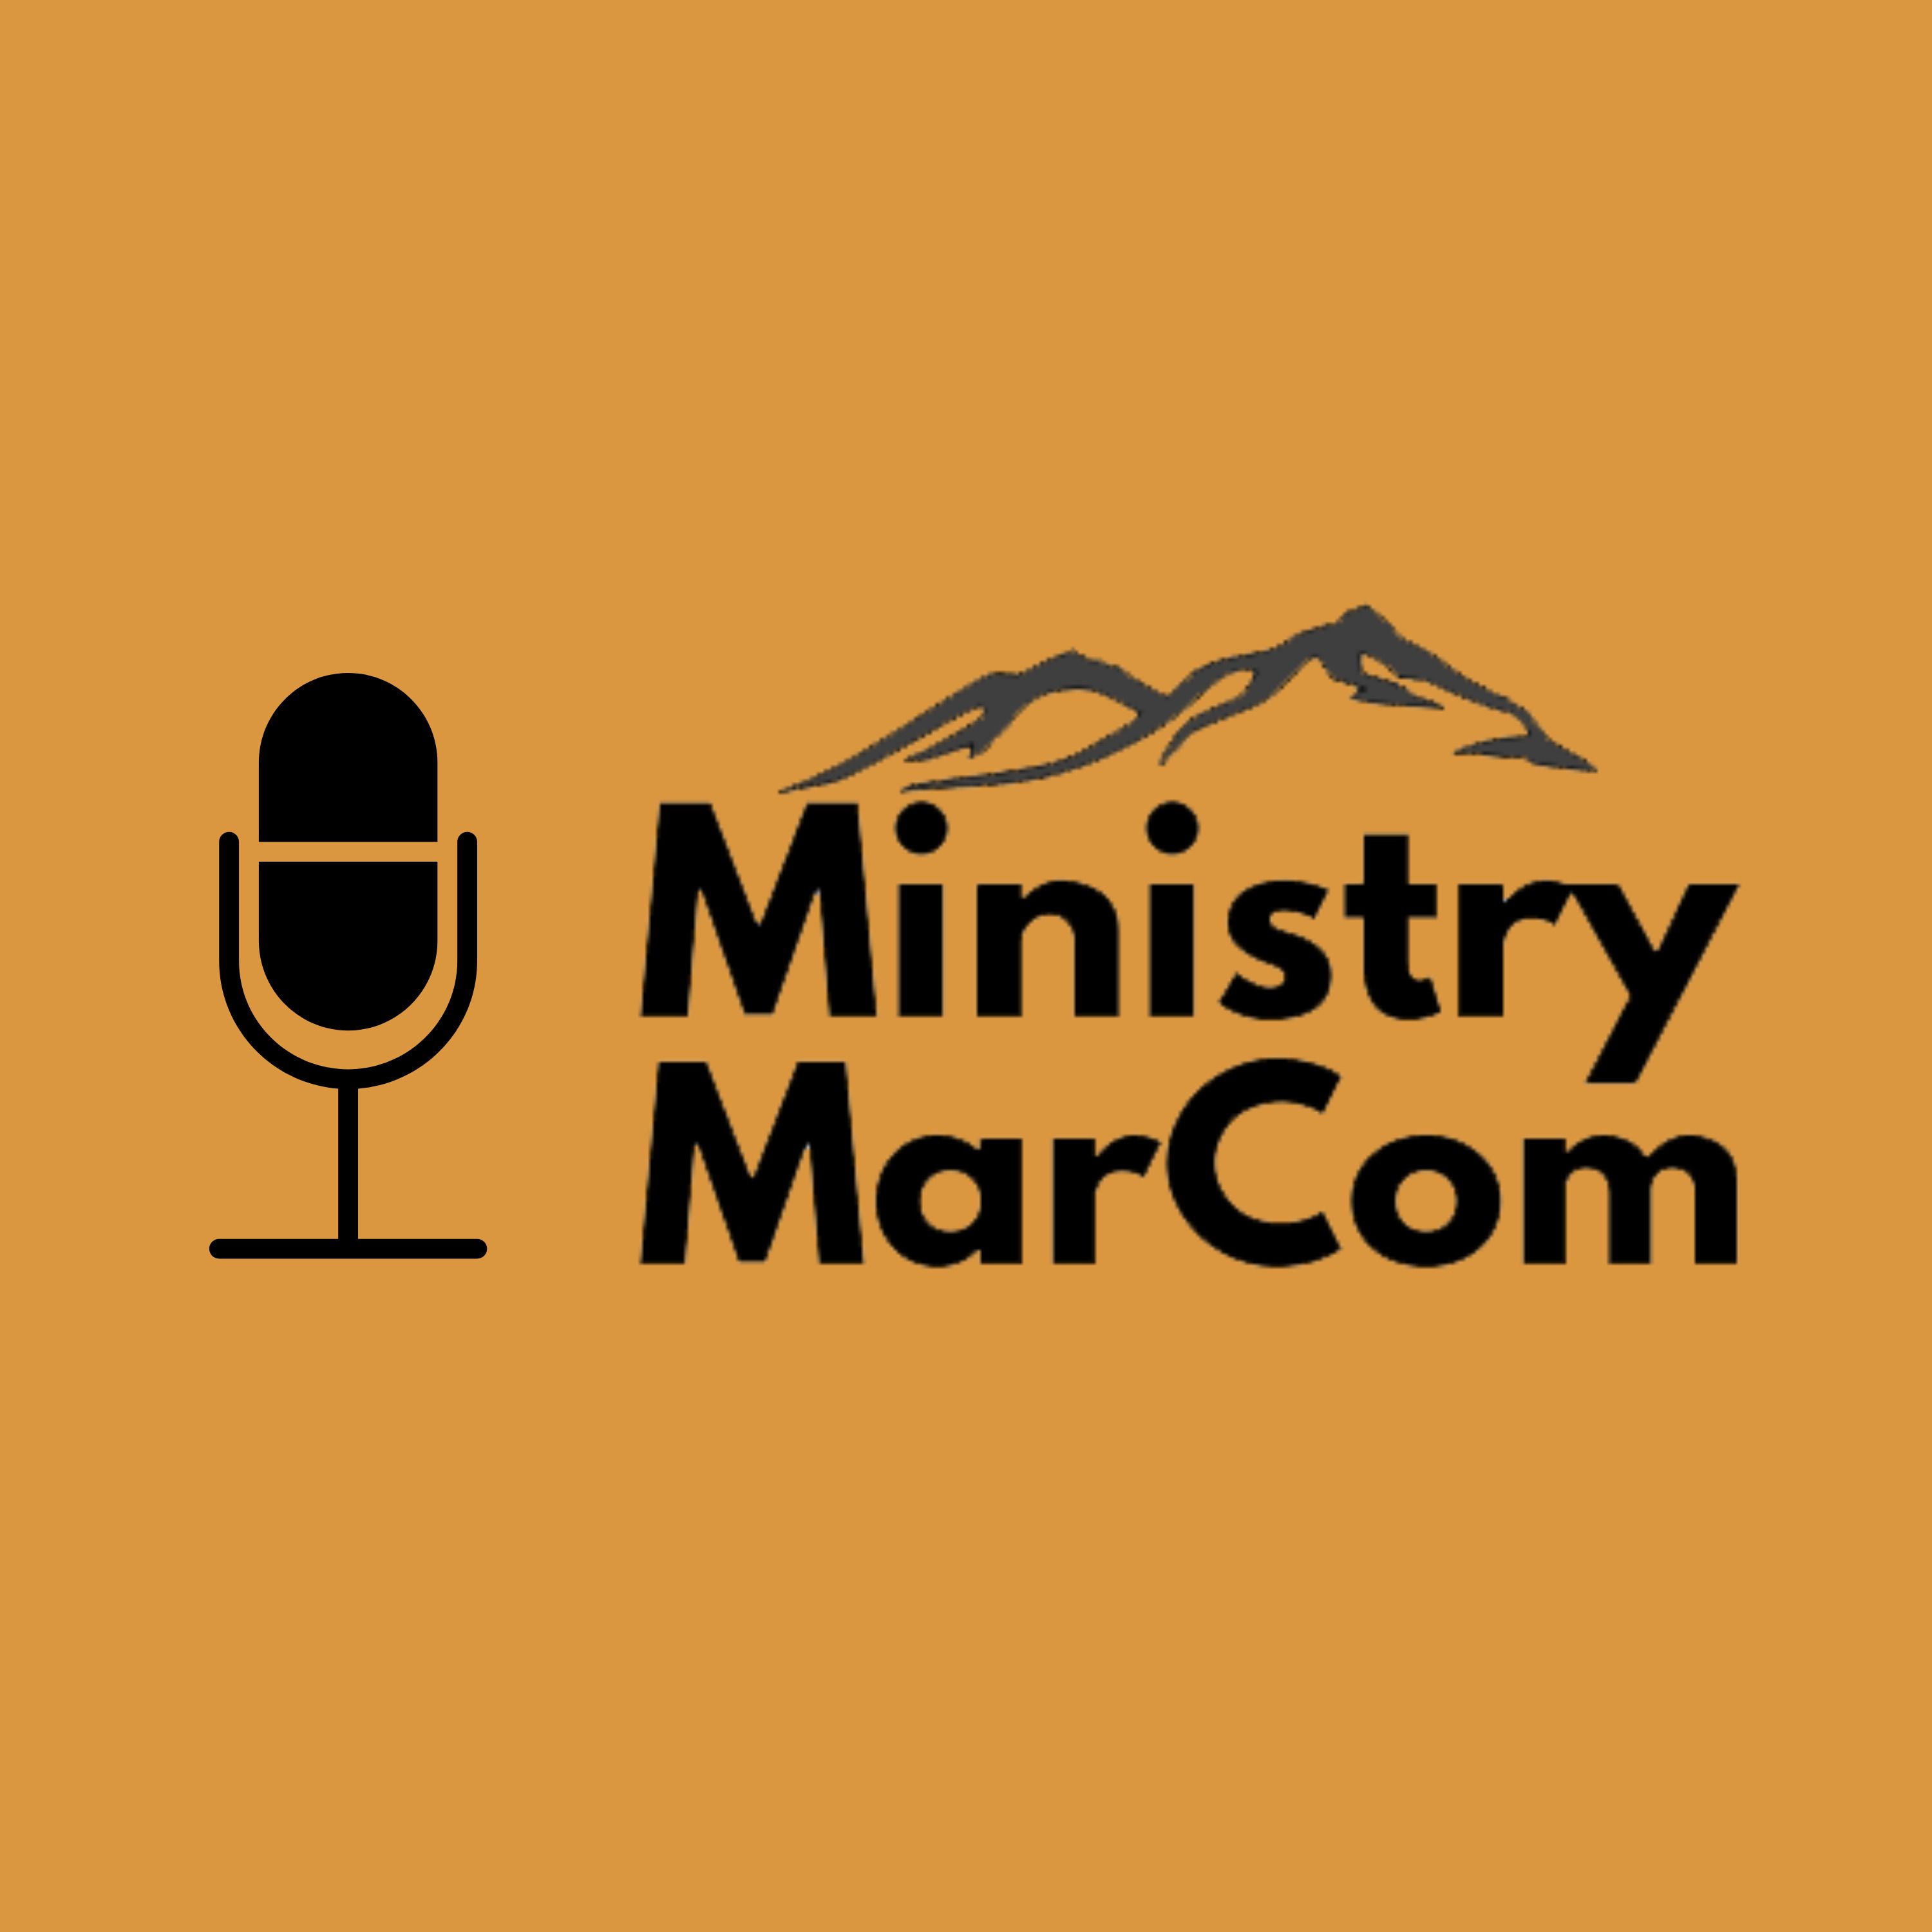 Ministry MarCom